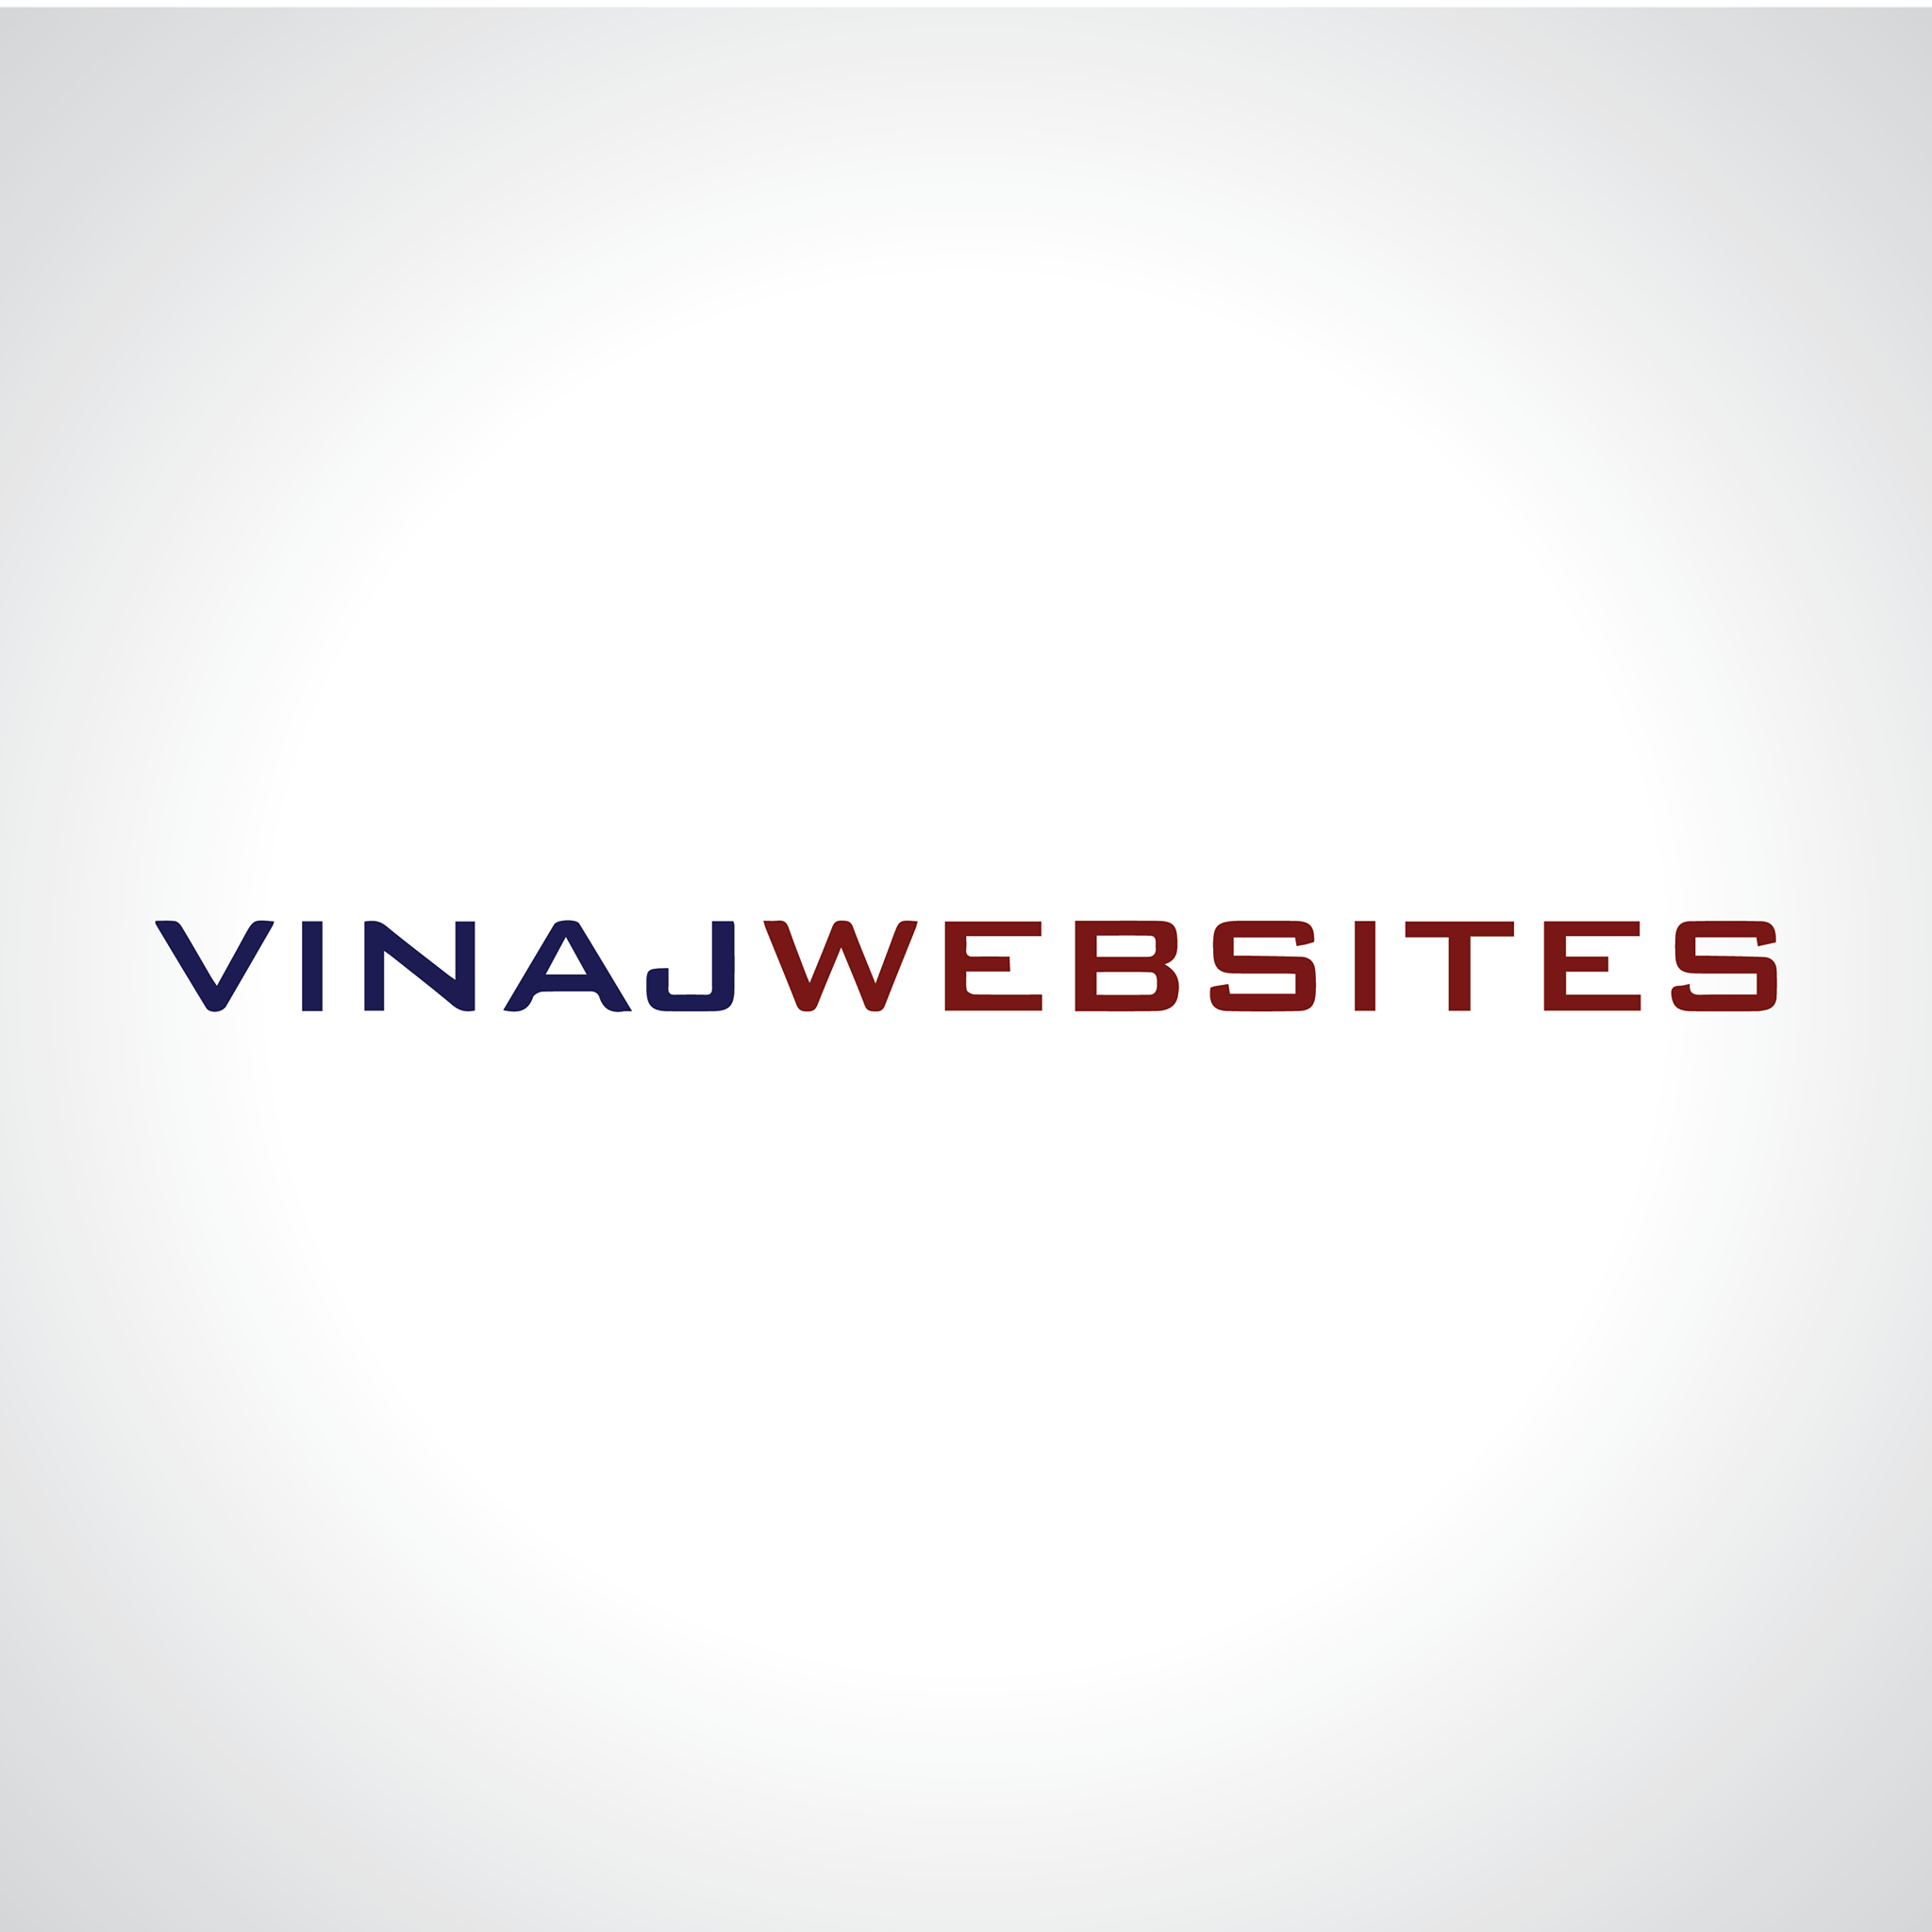 VINAJ Websites